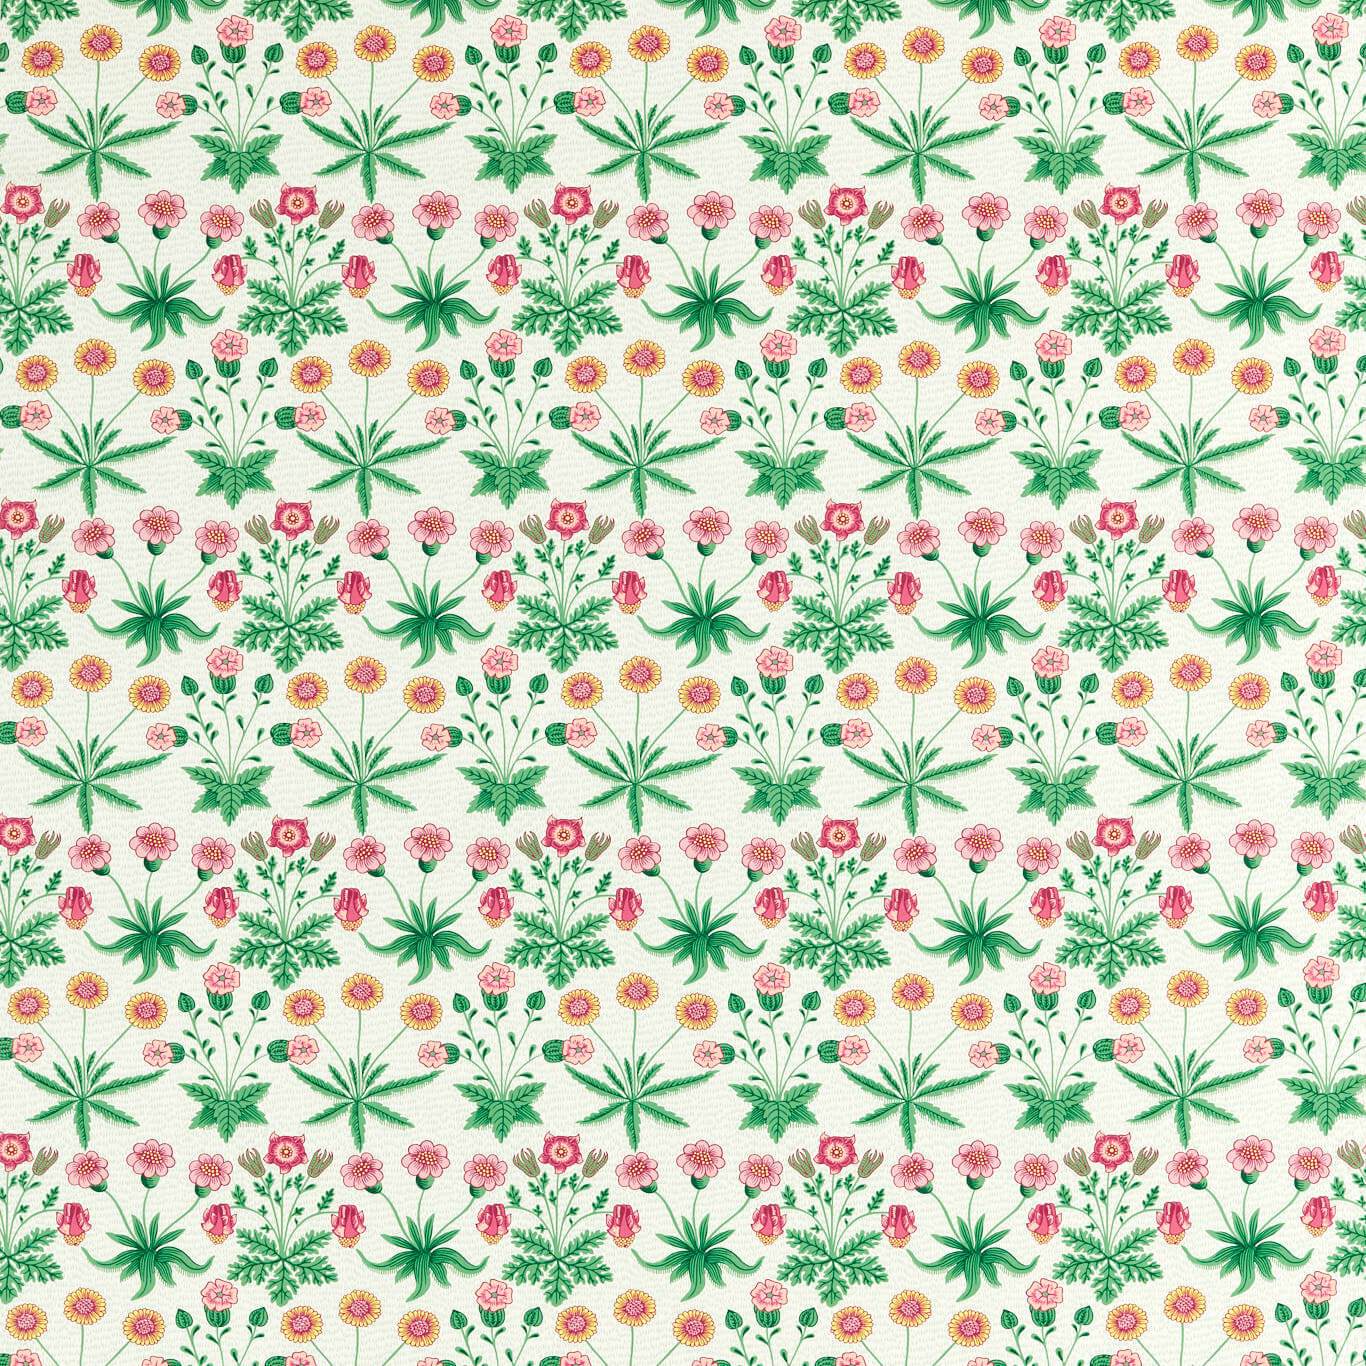 Daisy Strawberry Fields Fabric By Morris & Co